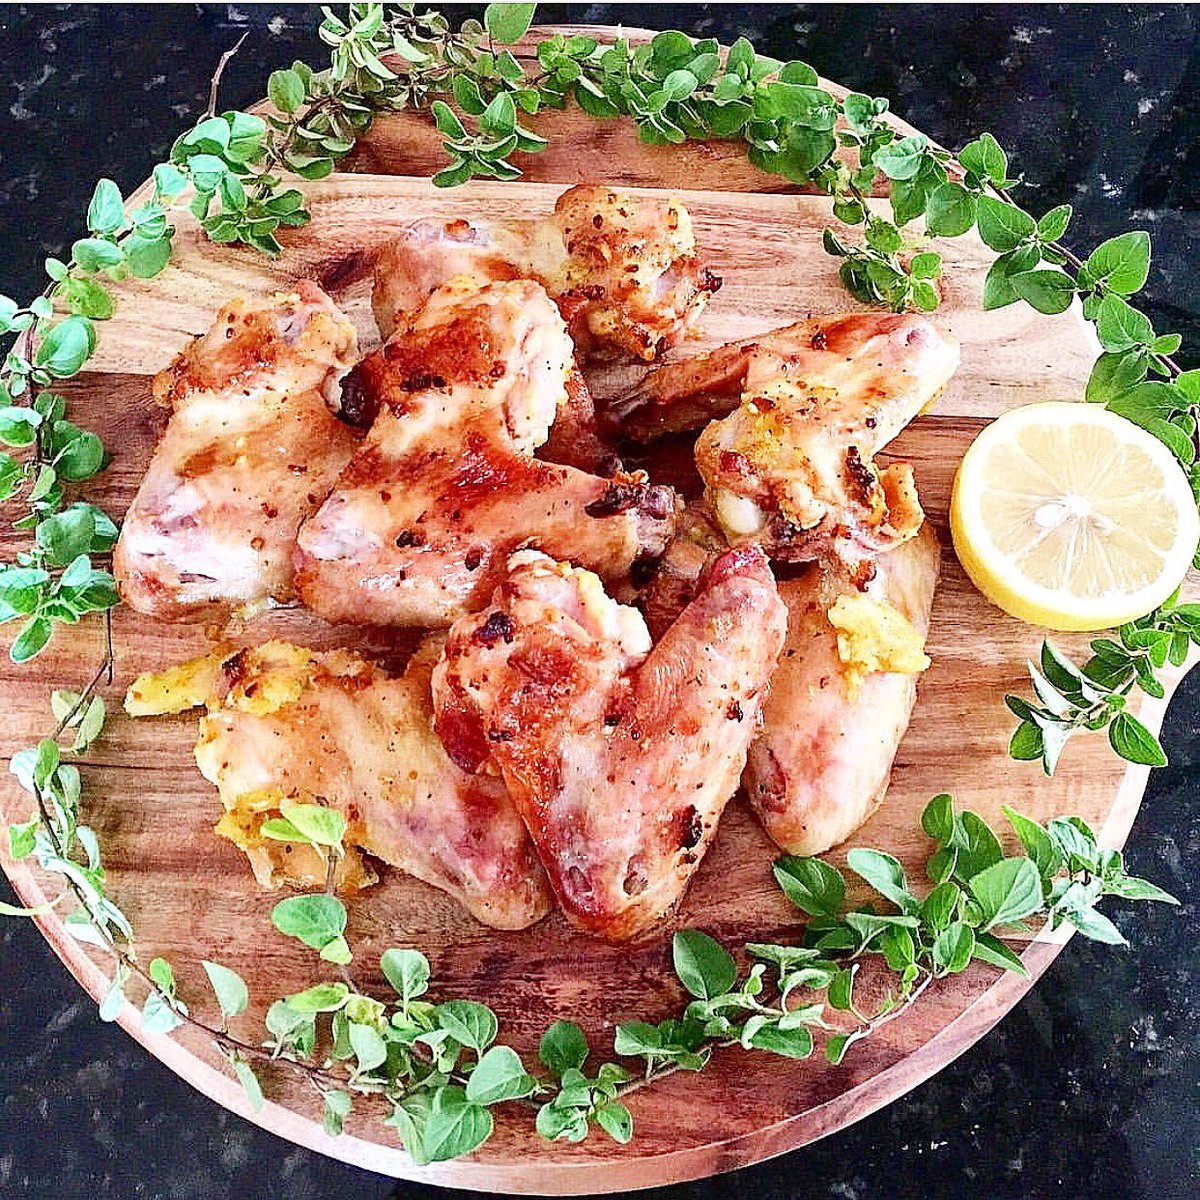 My Greek Style BBQ Chicken Wings Marinated In 4 Ingredients. Oregano Oil, Smoked Garlic, Vegeta Gourmet Stock & Lemon.
.
NOTE: Recipe Link In Bio
.
 #greekflavours #chicken #chickenwings #cooking #bbq #food    #lemon #smokedgarlic #oregano #vegetagourmetstock #sydneygirlmagazine